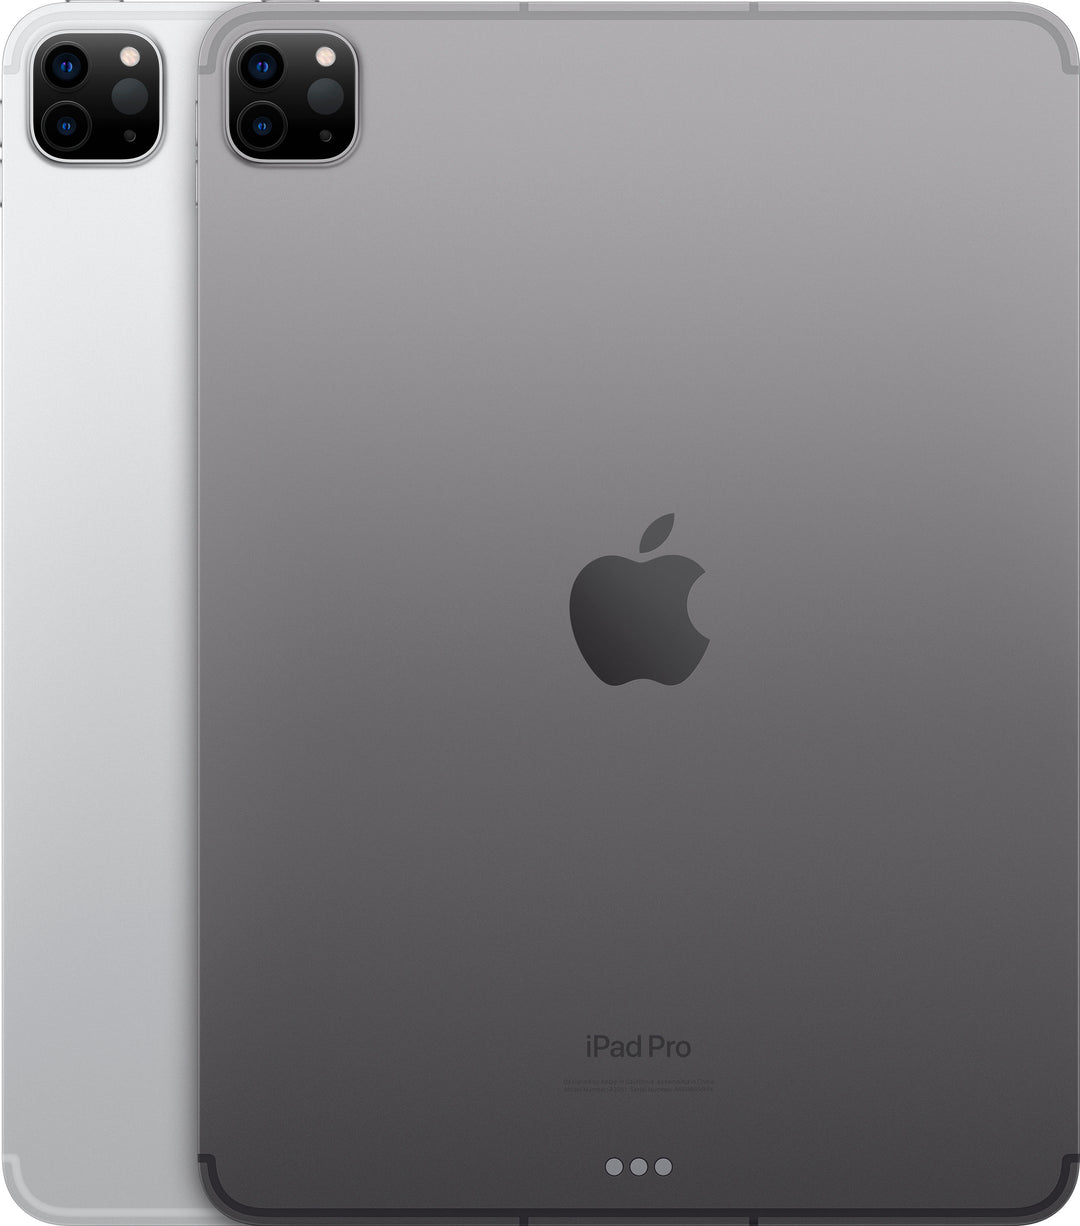 Apple - 11-Inch iPad Pro (Latest Model) with Wi-Fi + Cellular - 512GB - Space Gray (Verizon)_4